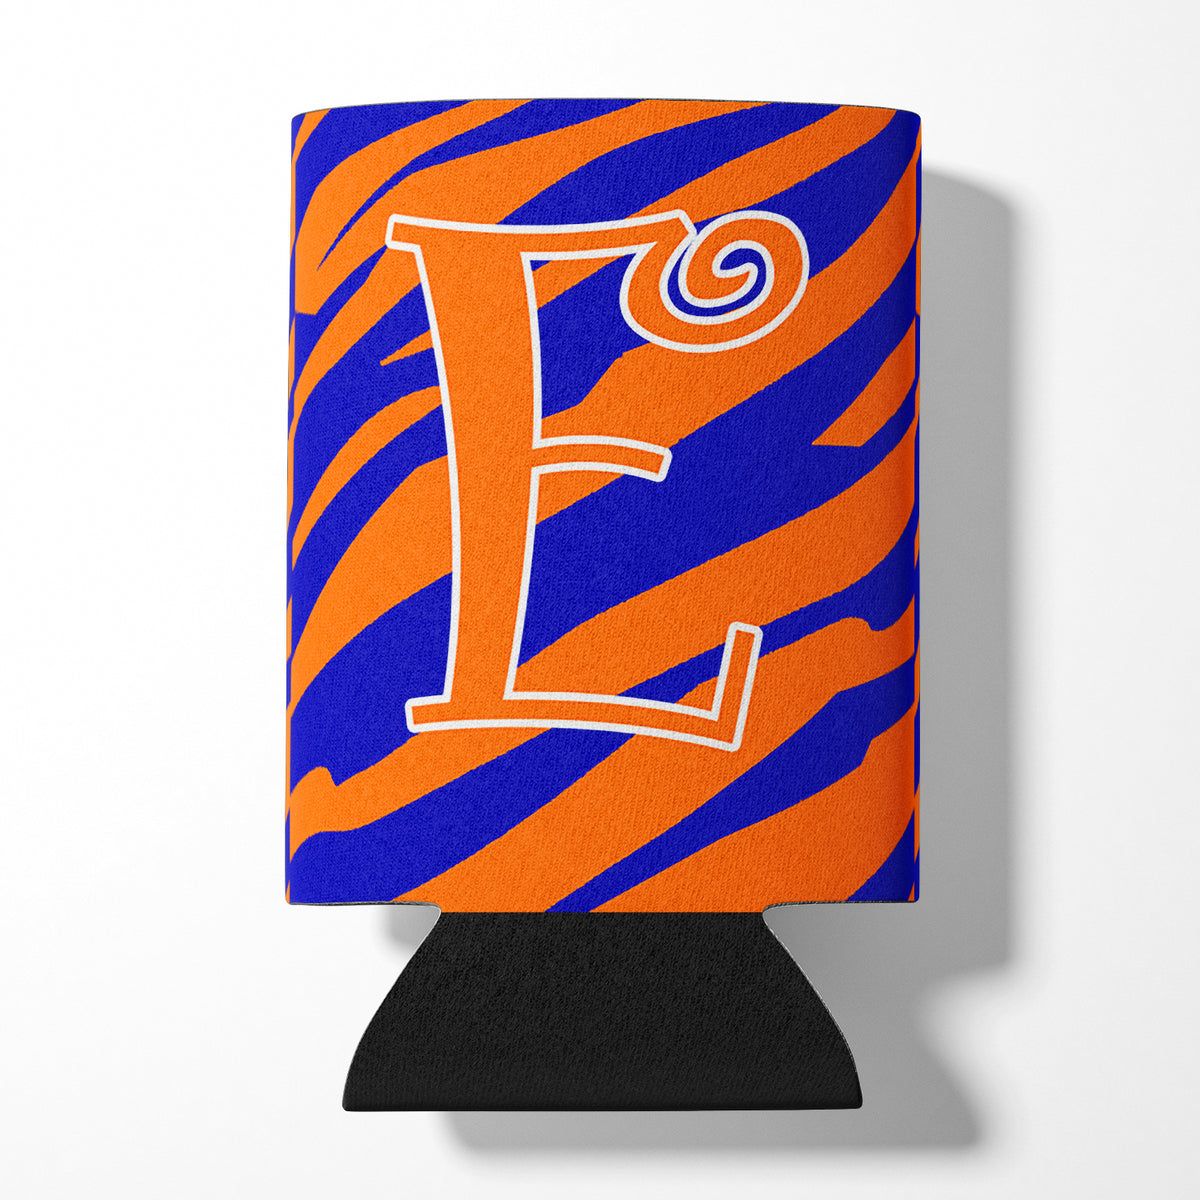 Letter E Initial Monogram - Tiger Stripe Blue and Orange Can Beverage Insulator Hugger